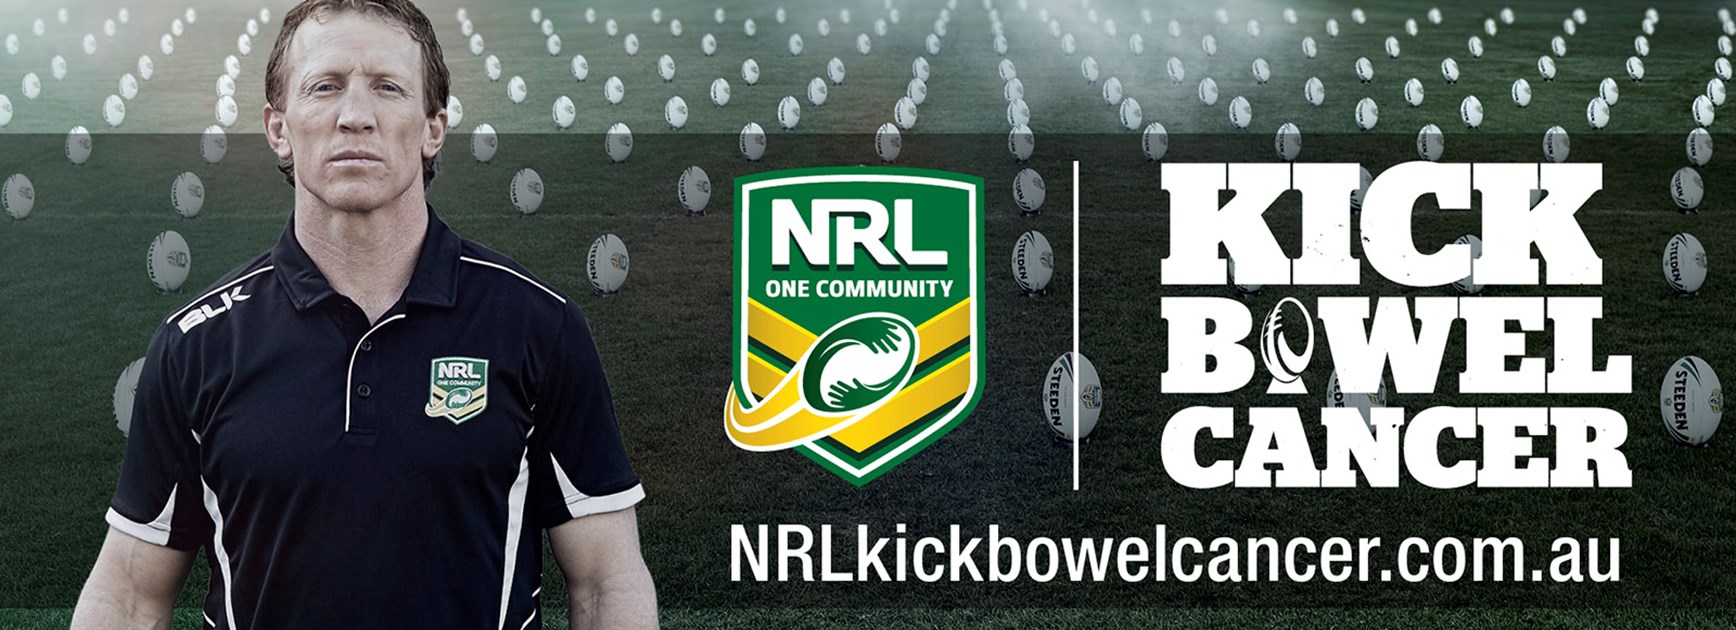 Former Canberra Raiders captain Alan Tongue is an ambassador for NRL Kick Bowel Cancer.